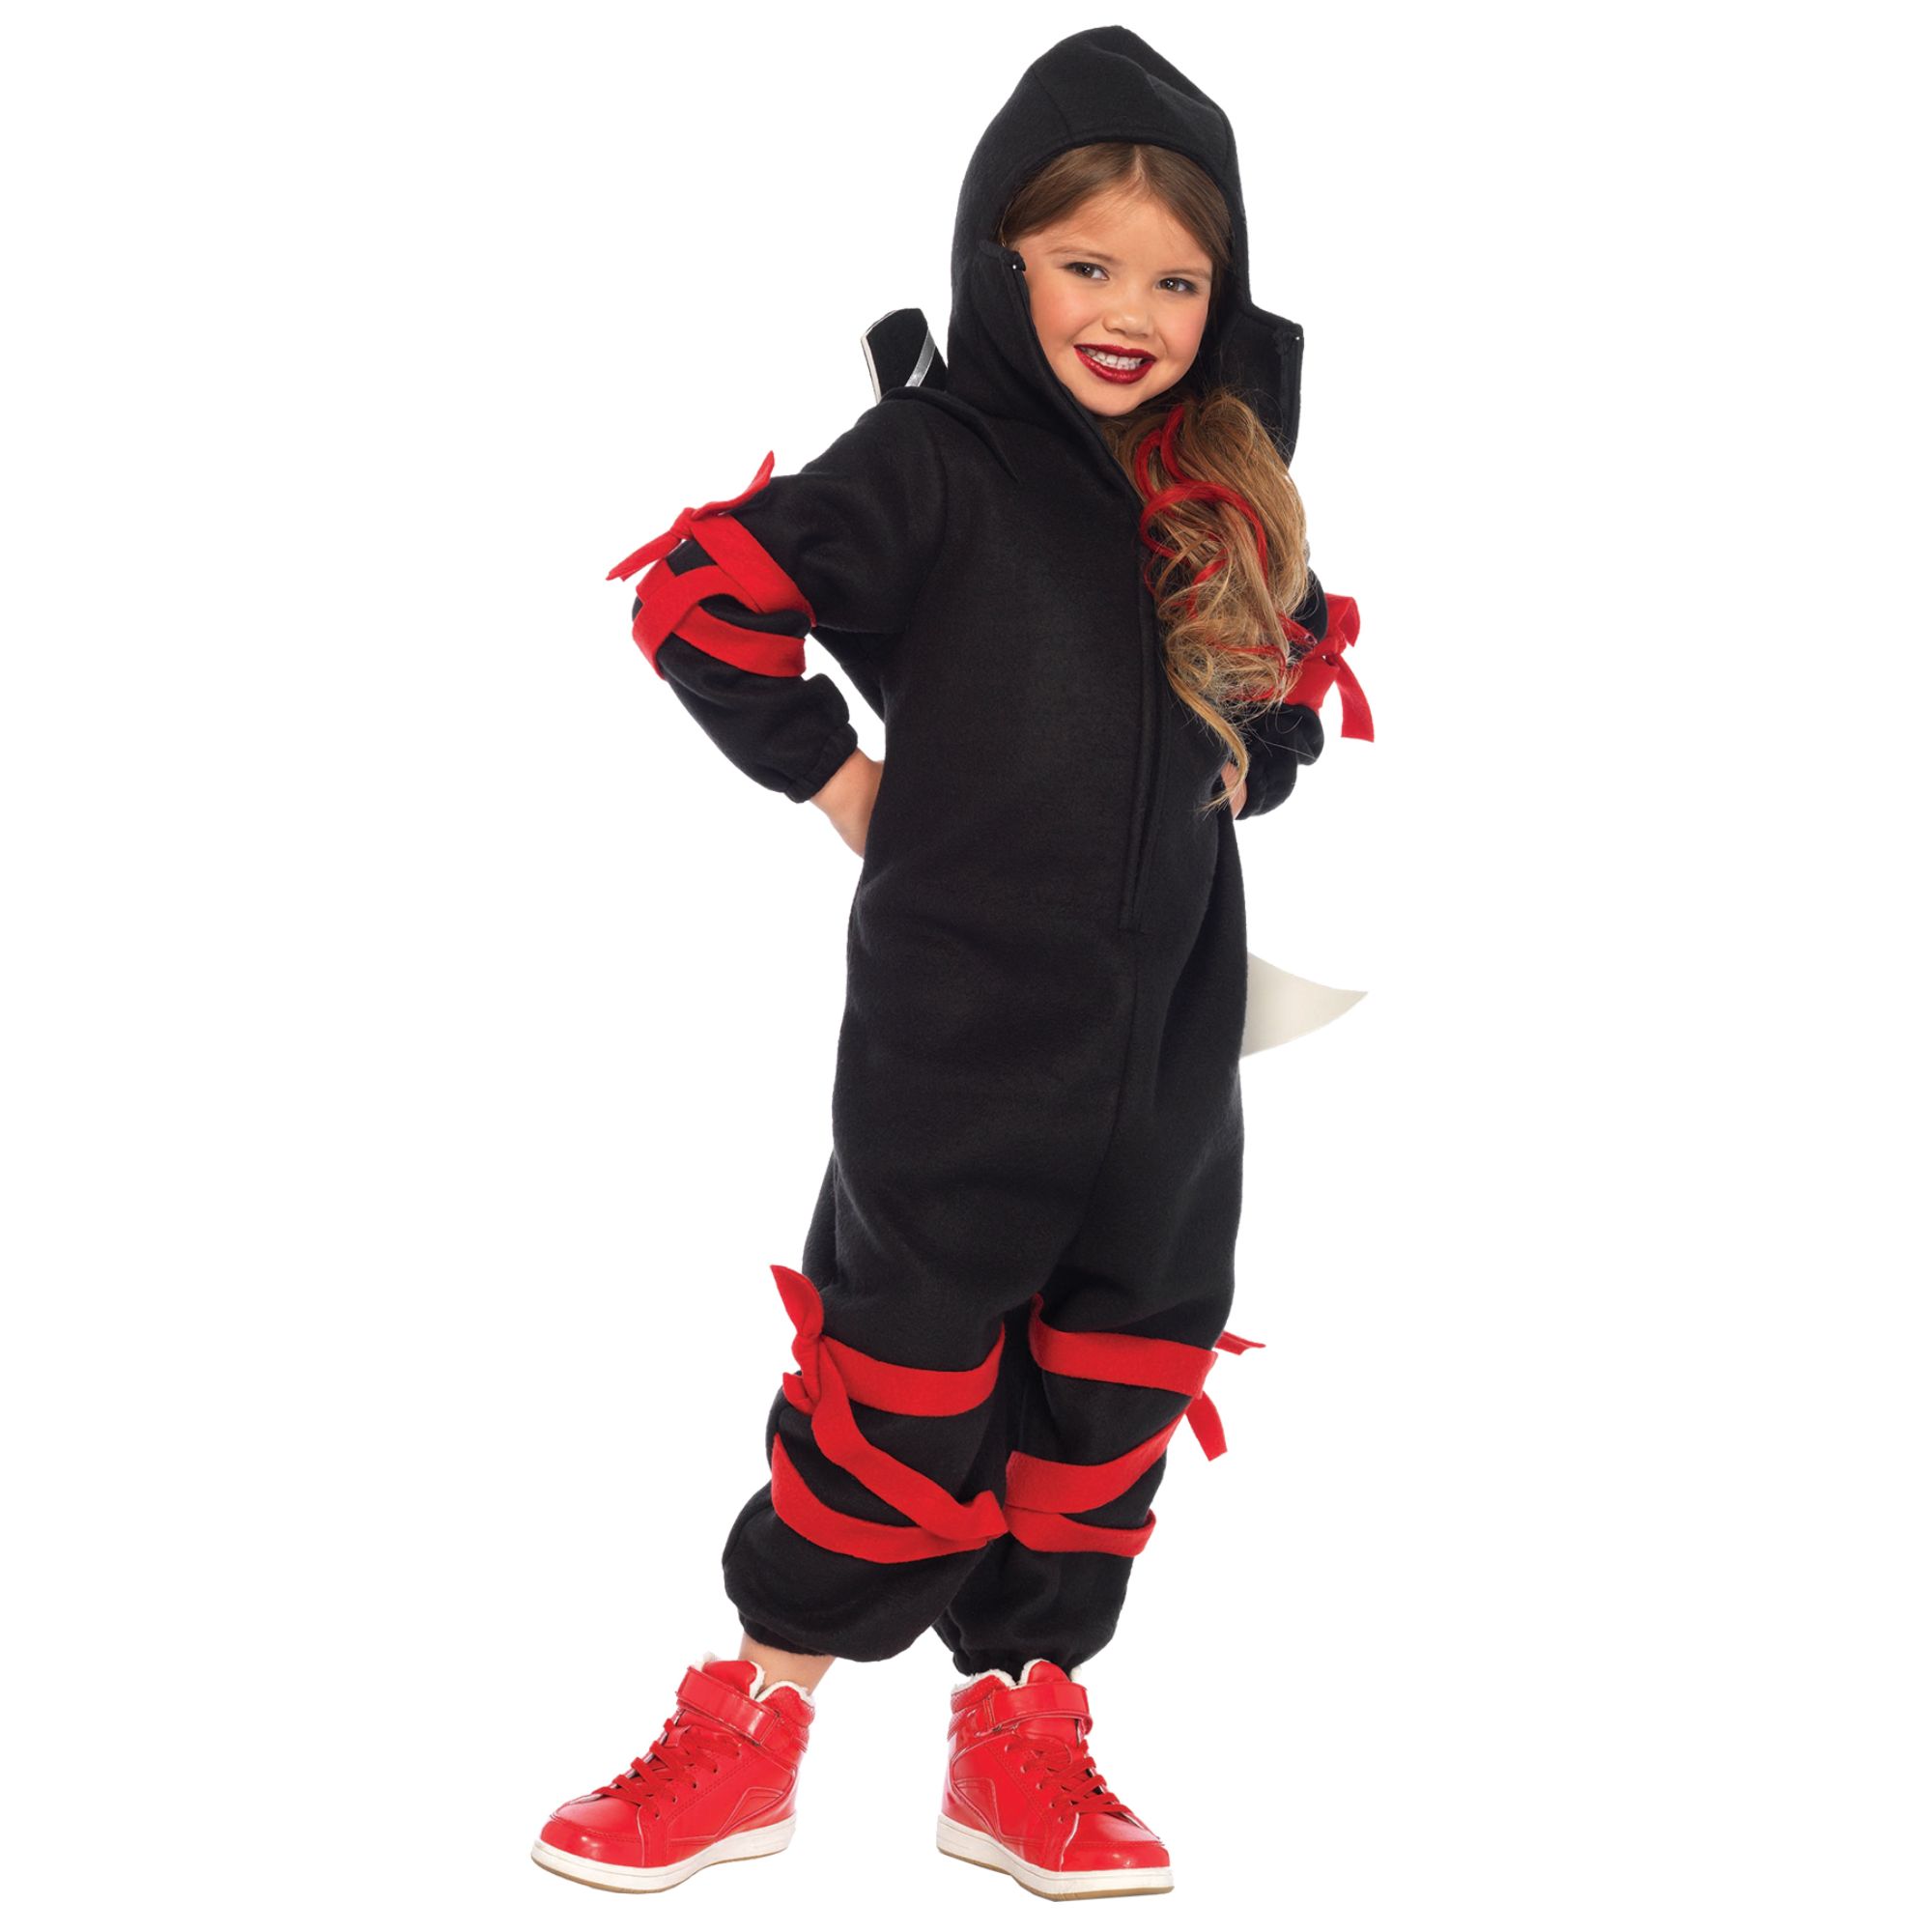 The Costume Center Black and Red Girl Child Ninja Kigurumi Funsies Halloween Costume - XL